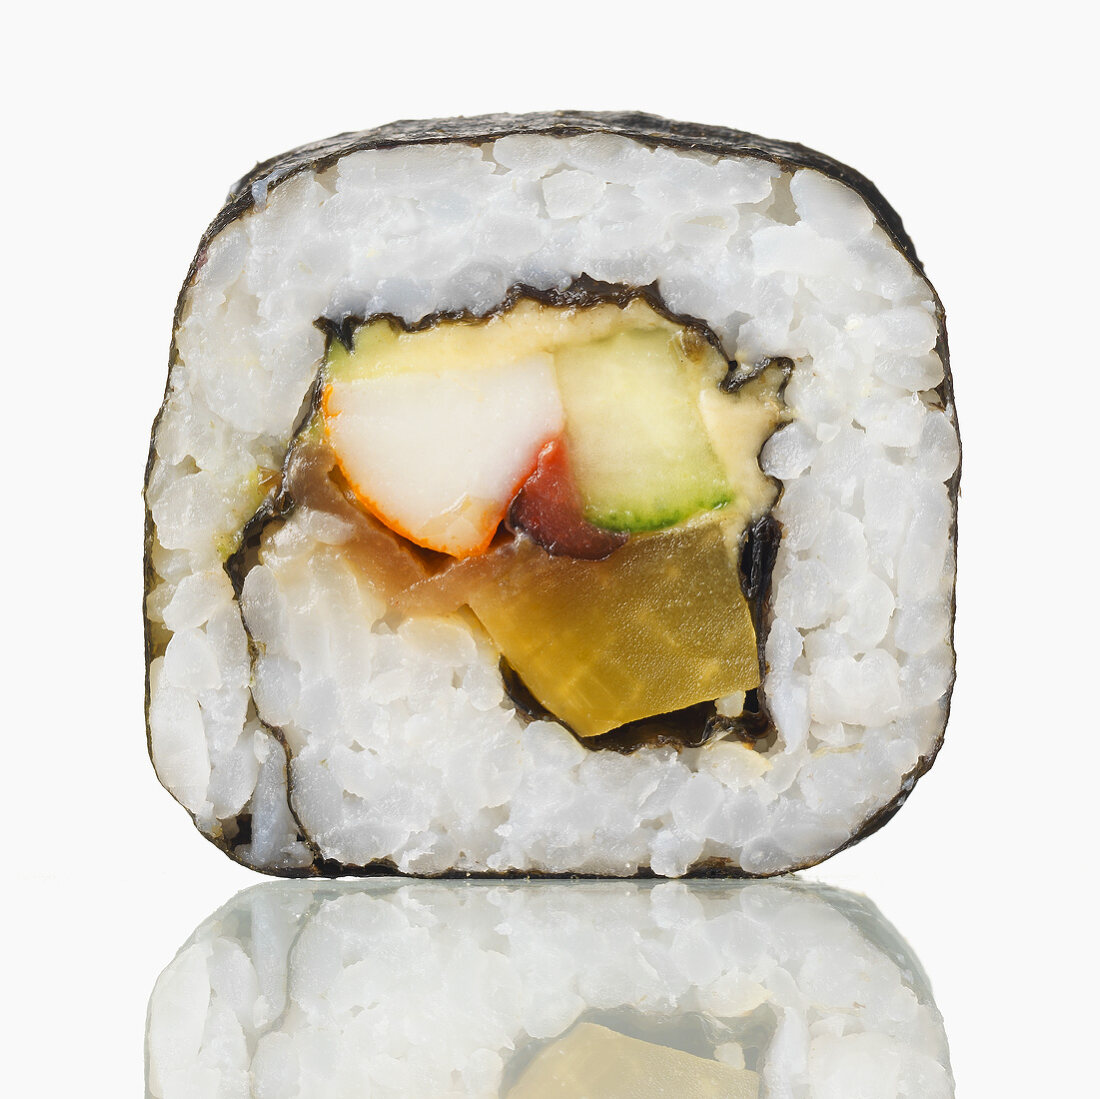 A maki sushi